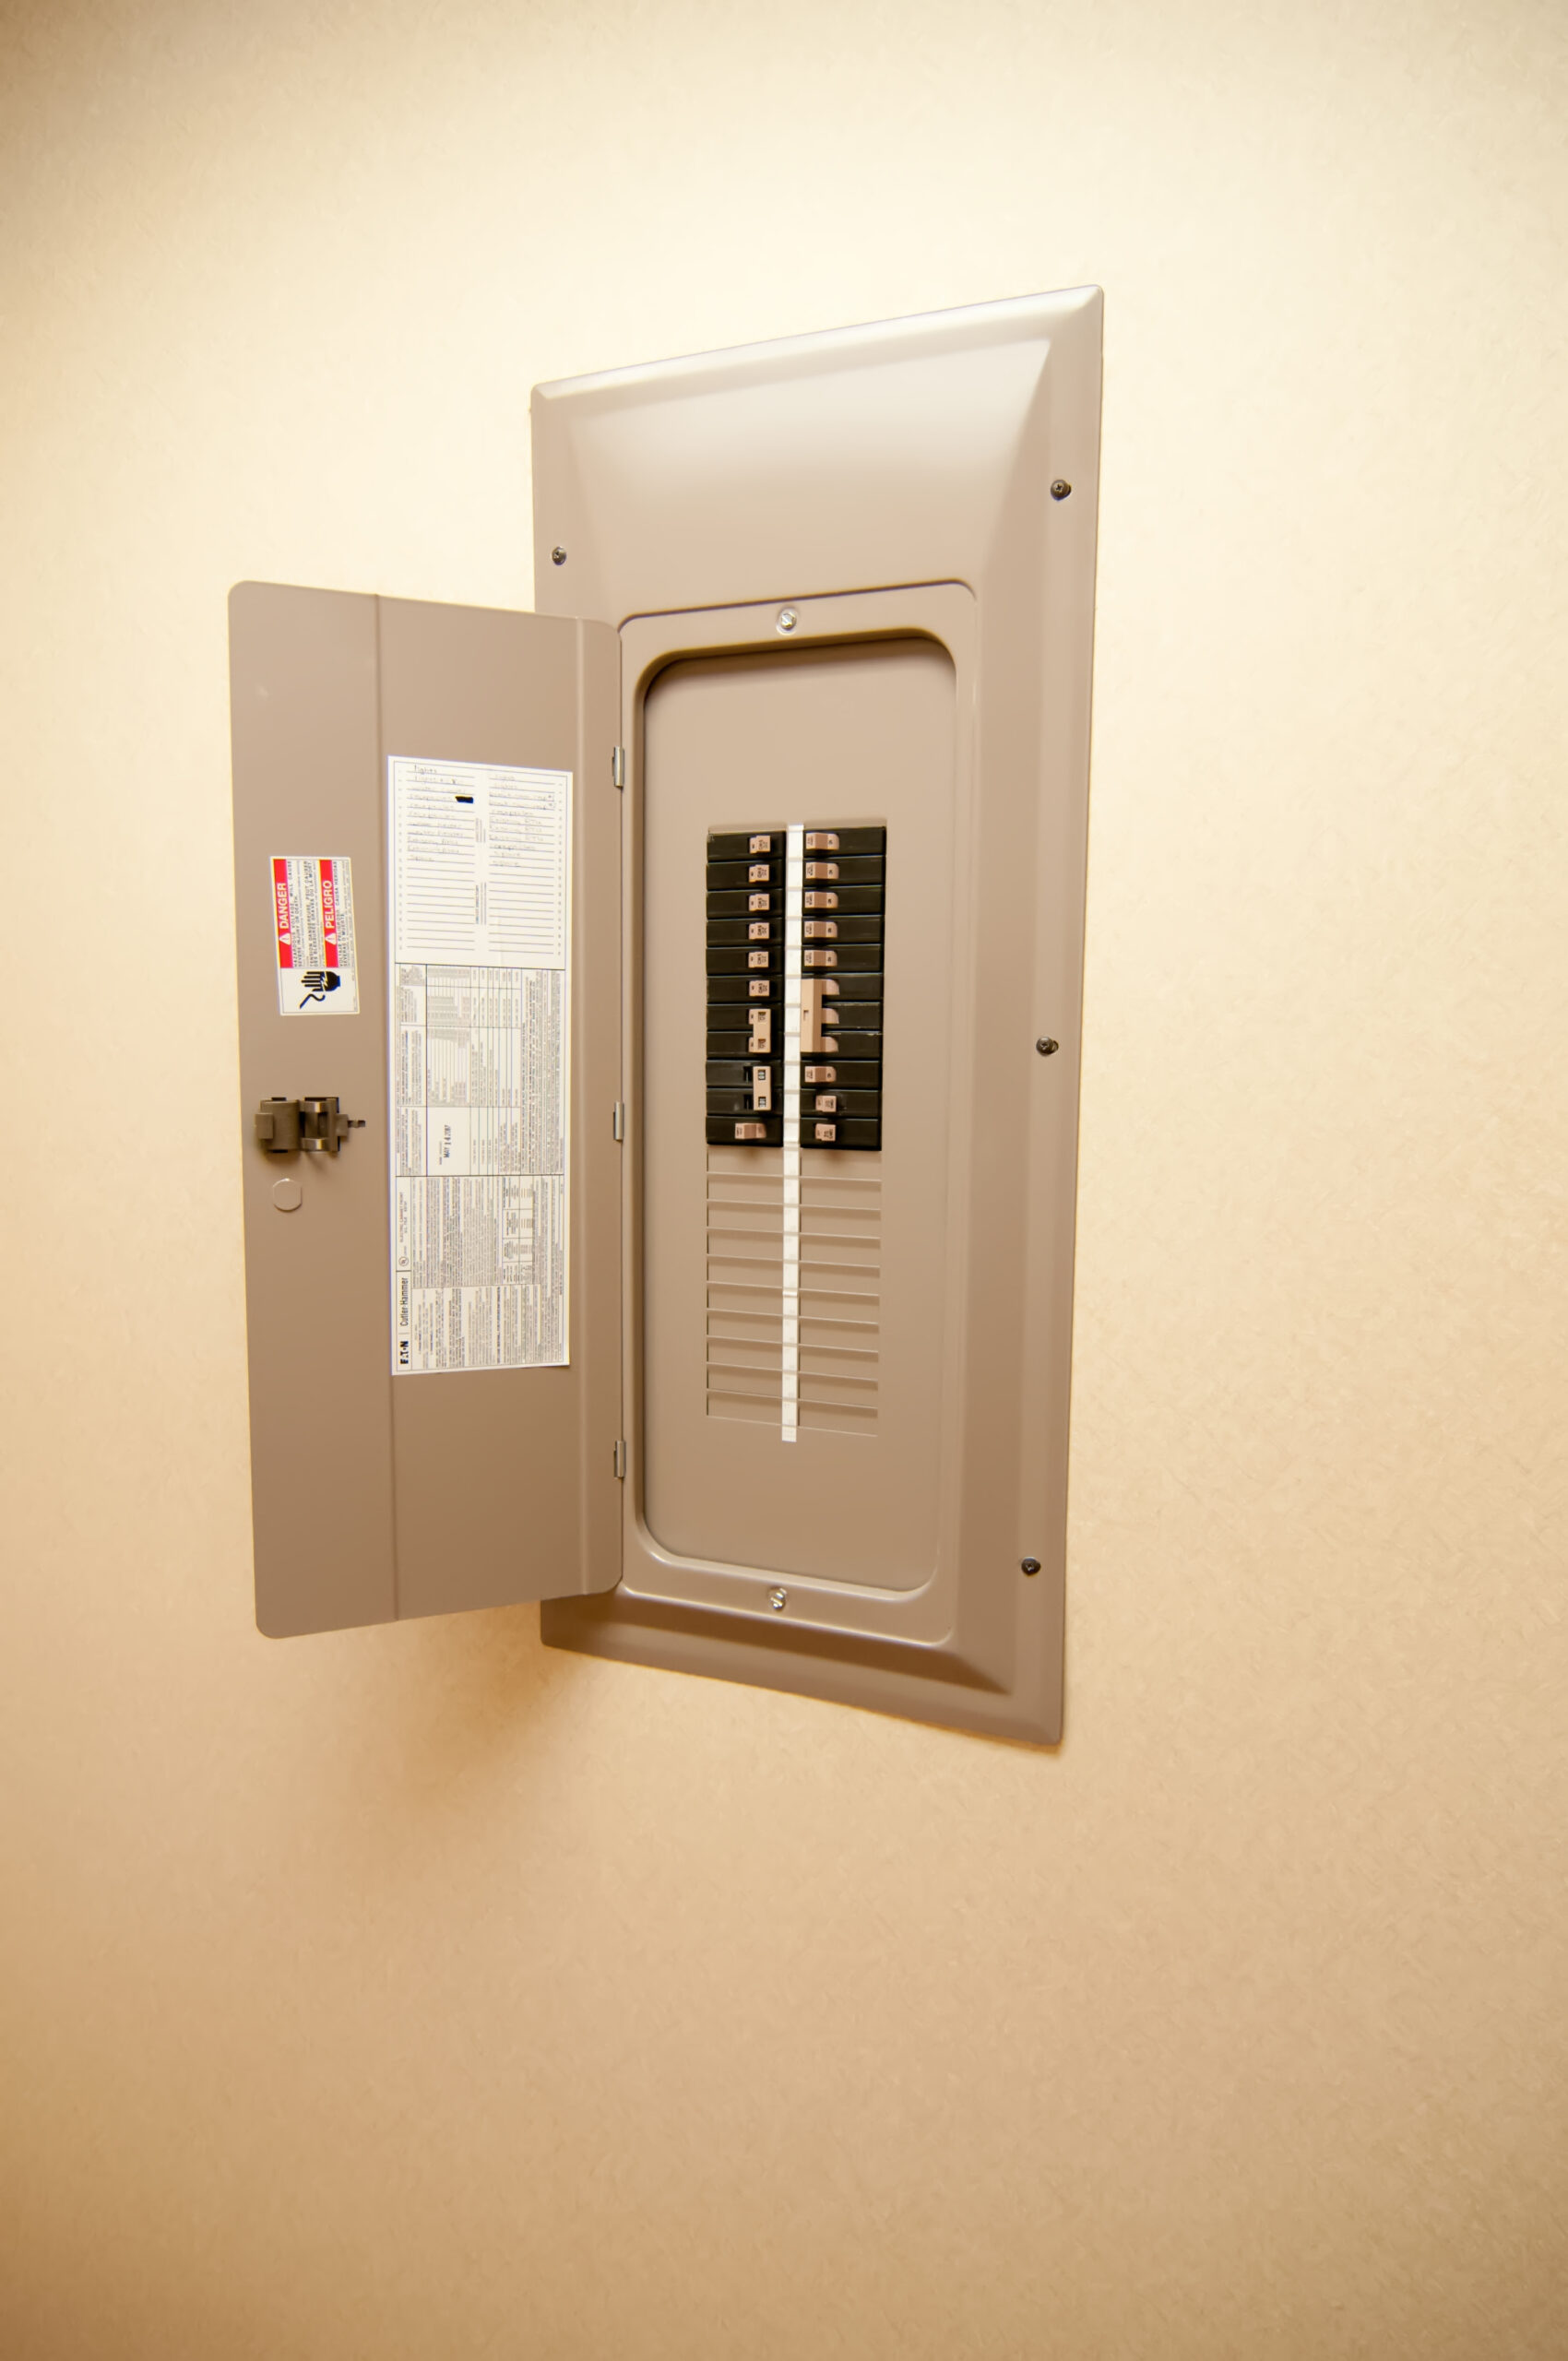 Electrical panel upgraded in Utah